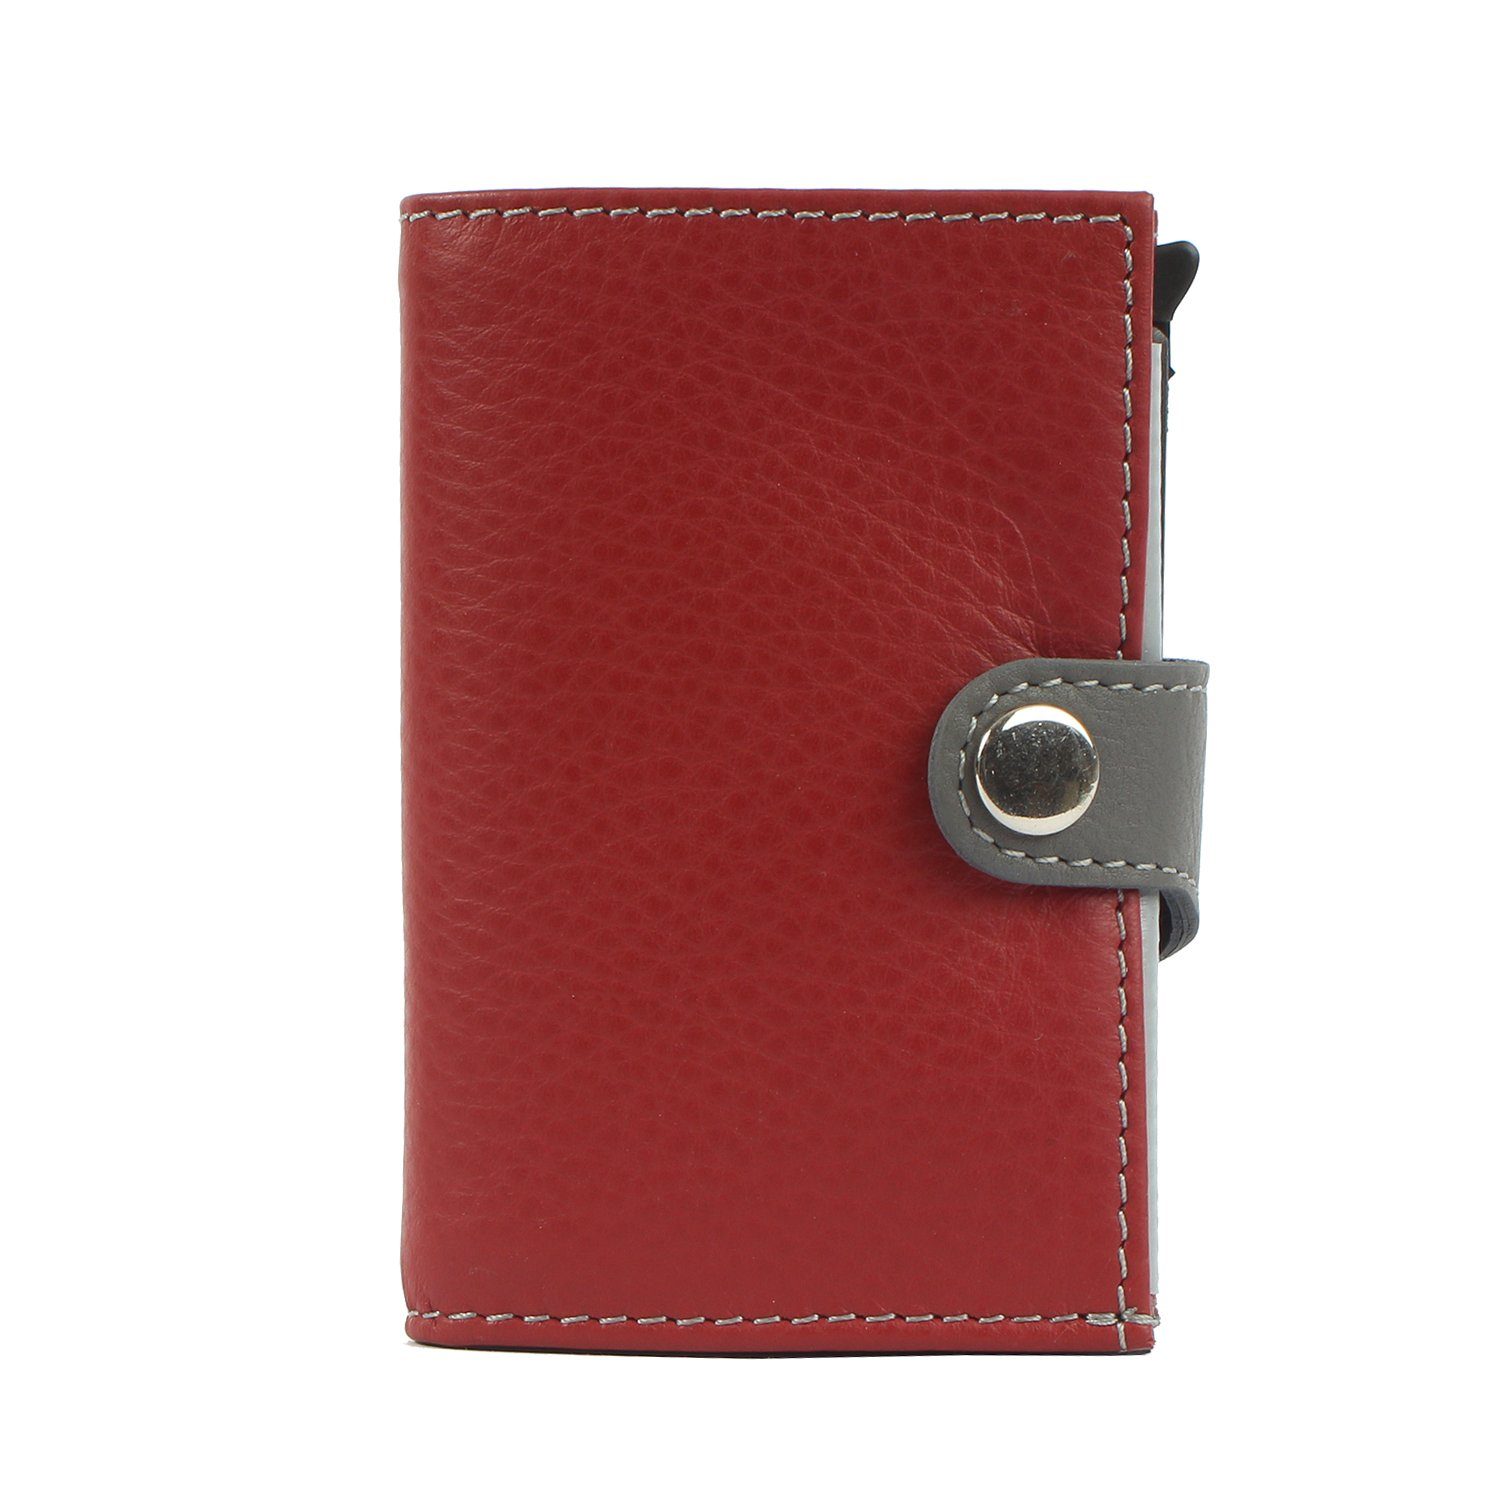 Margelisch Mini Geldbörse Upcycling Leder Kreditkartenbörse single aus leather, noonyu karminrot